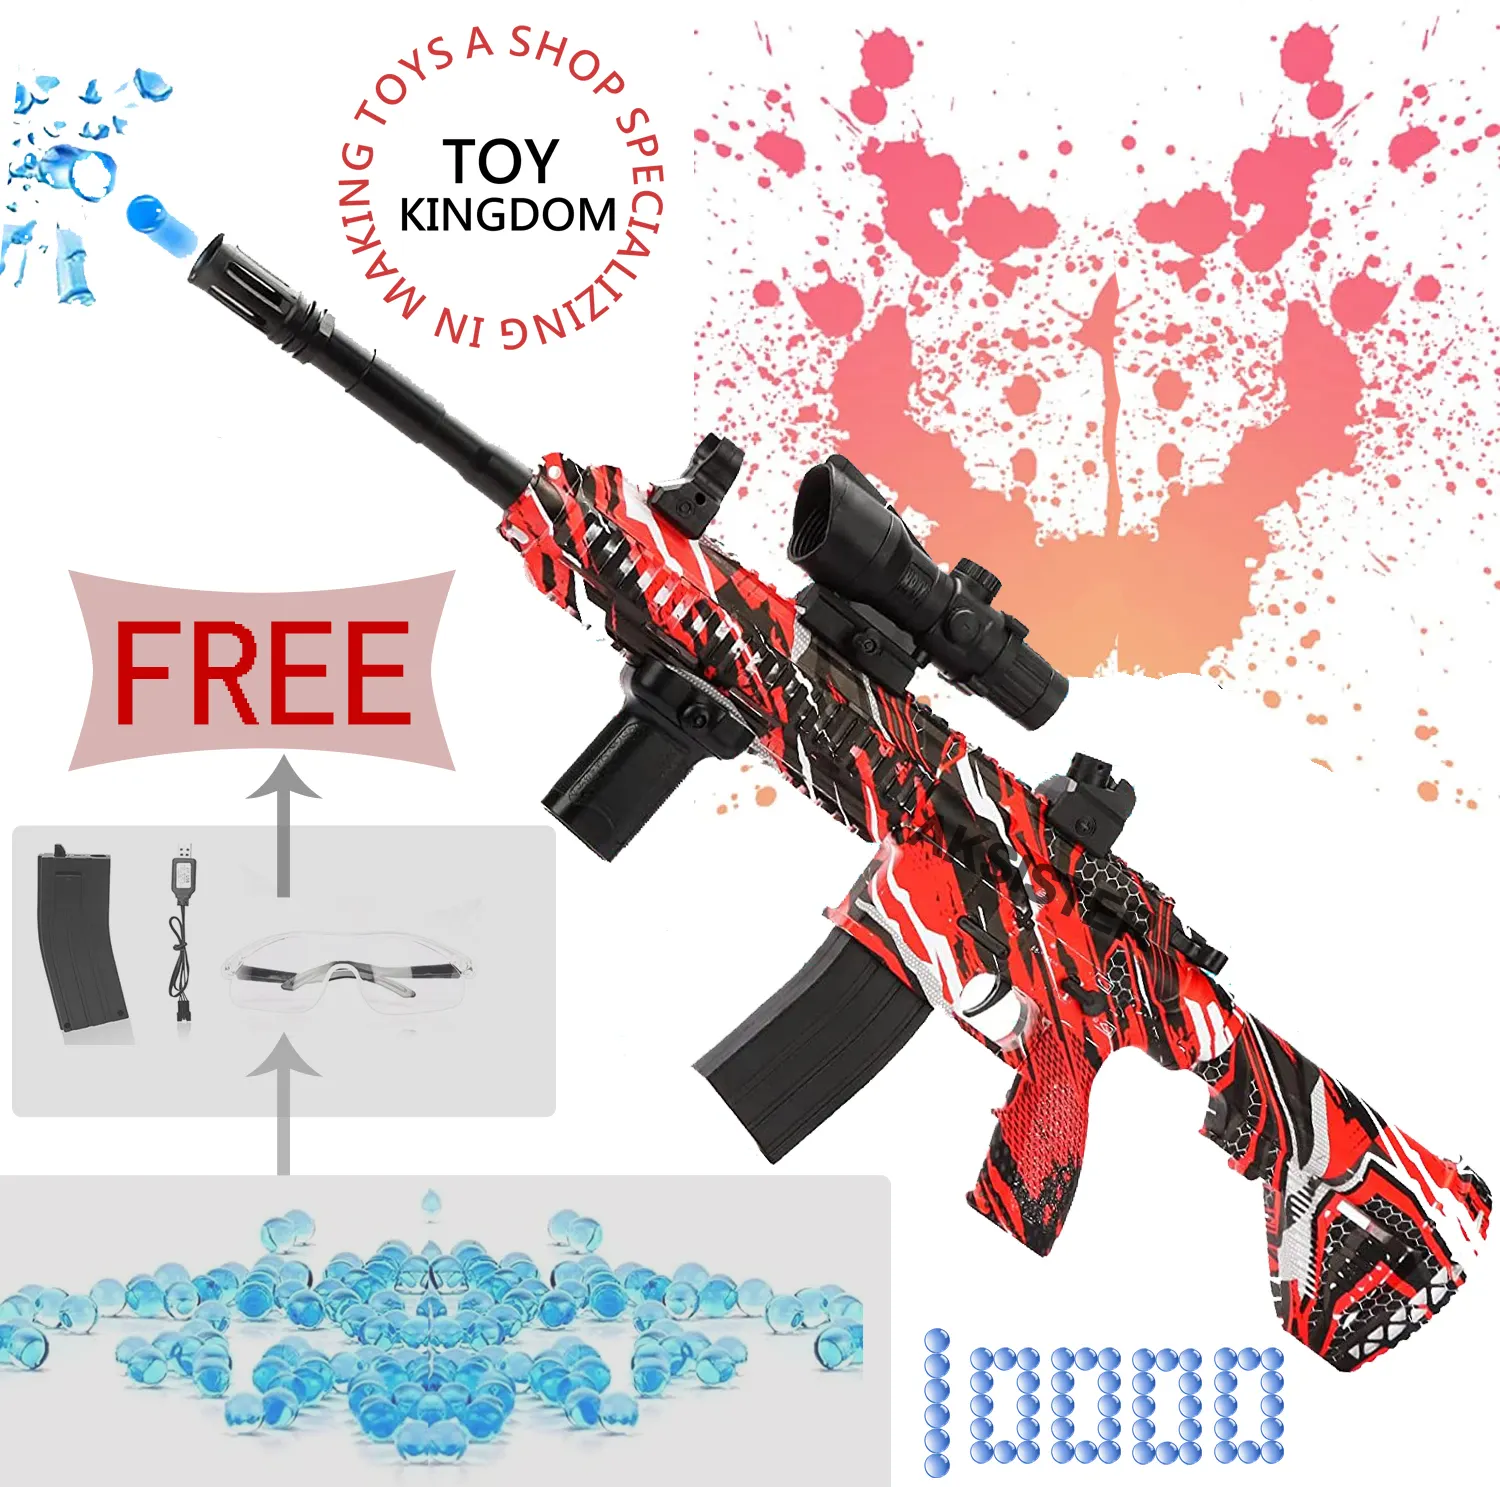 M416 Gel Balls Gun Toy with 5000 Gel Soft Splatter Balls Toy Gun for Outdoor Game CS Adults Children's Giftsai